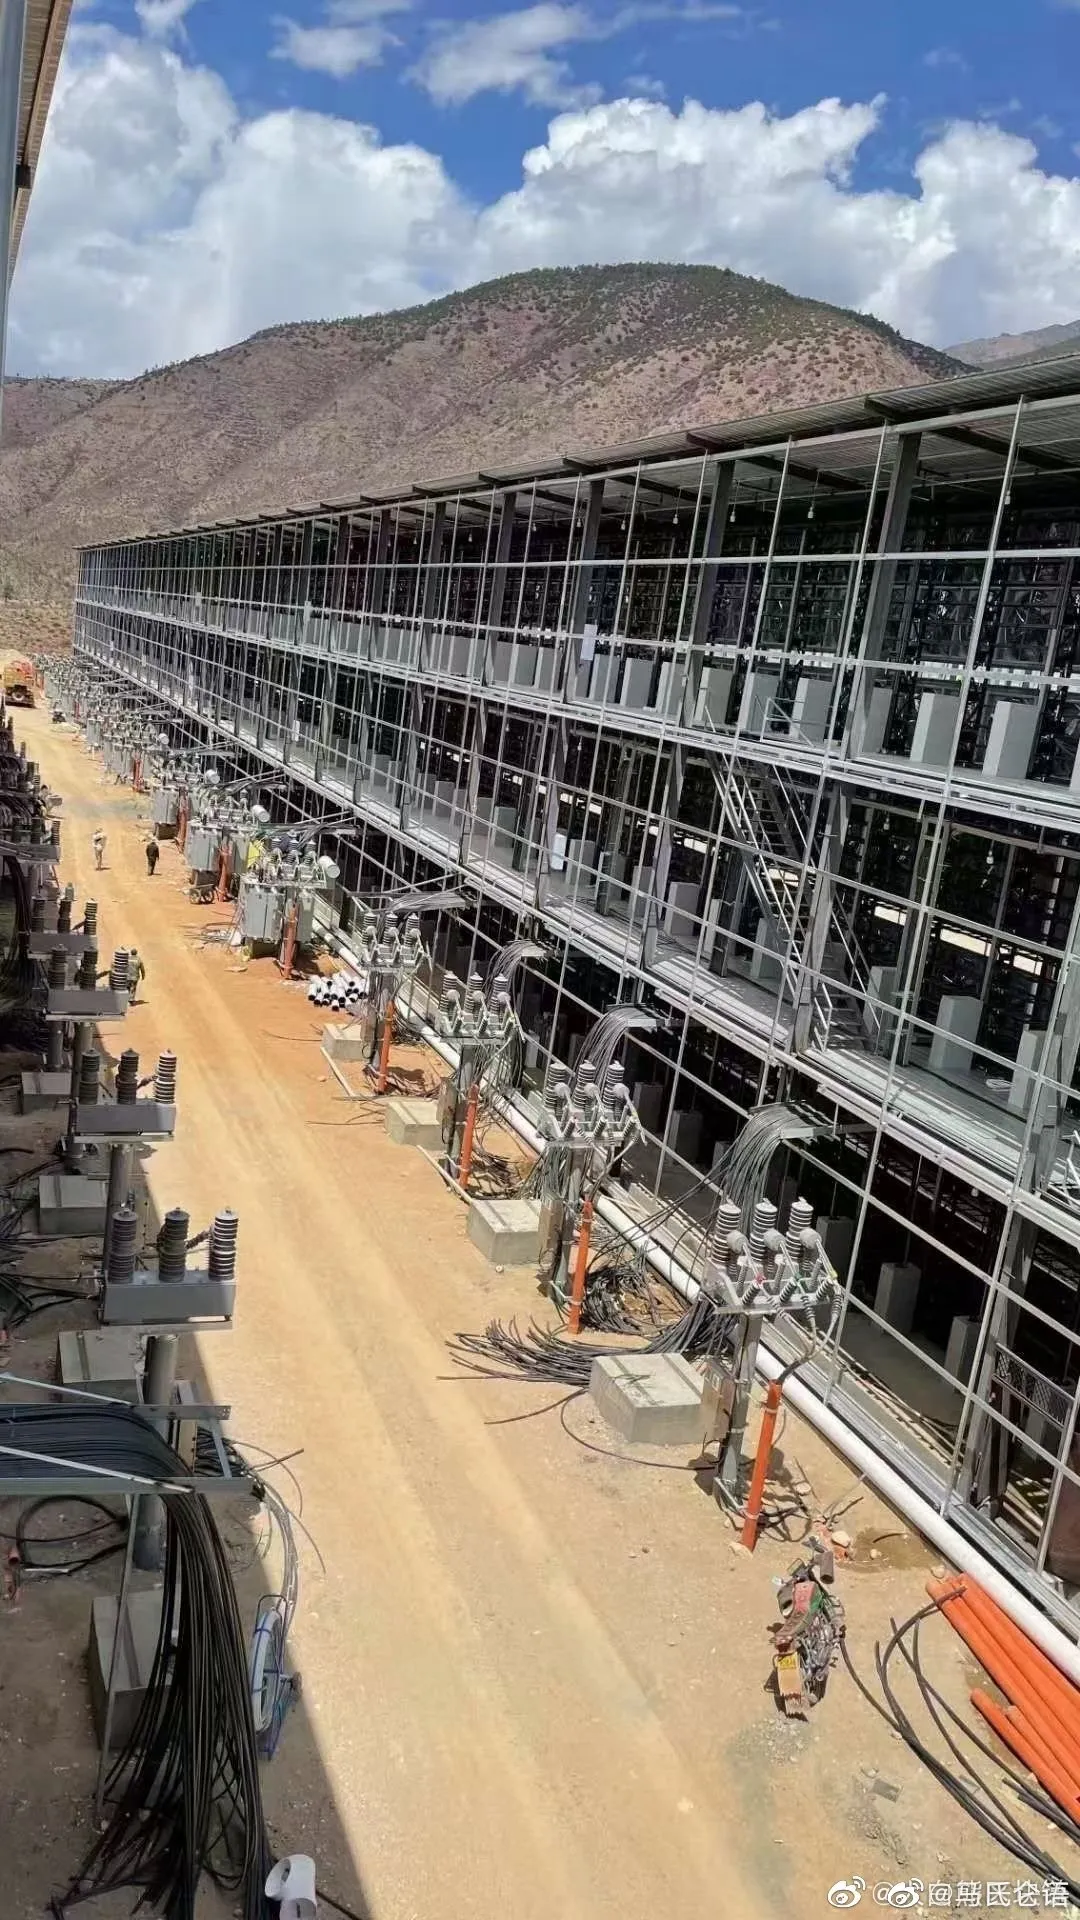 Desert filled with empty Bitcoin mining racks.